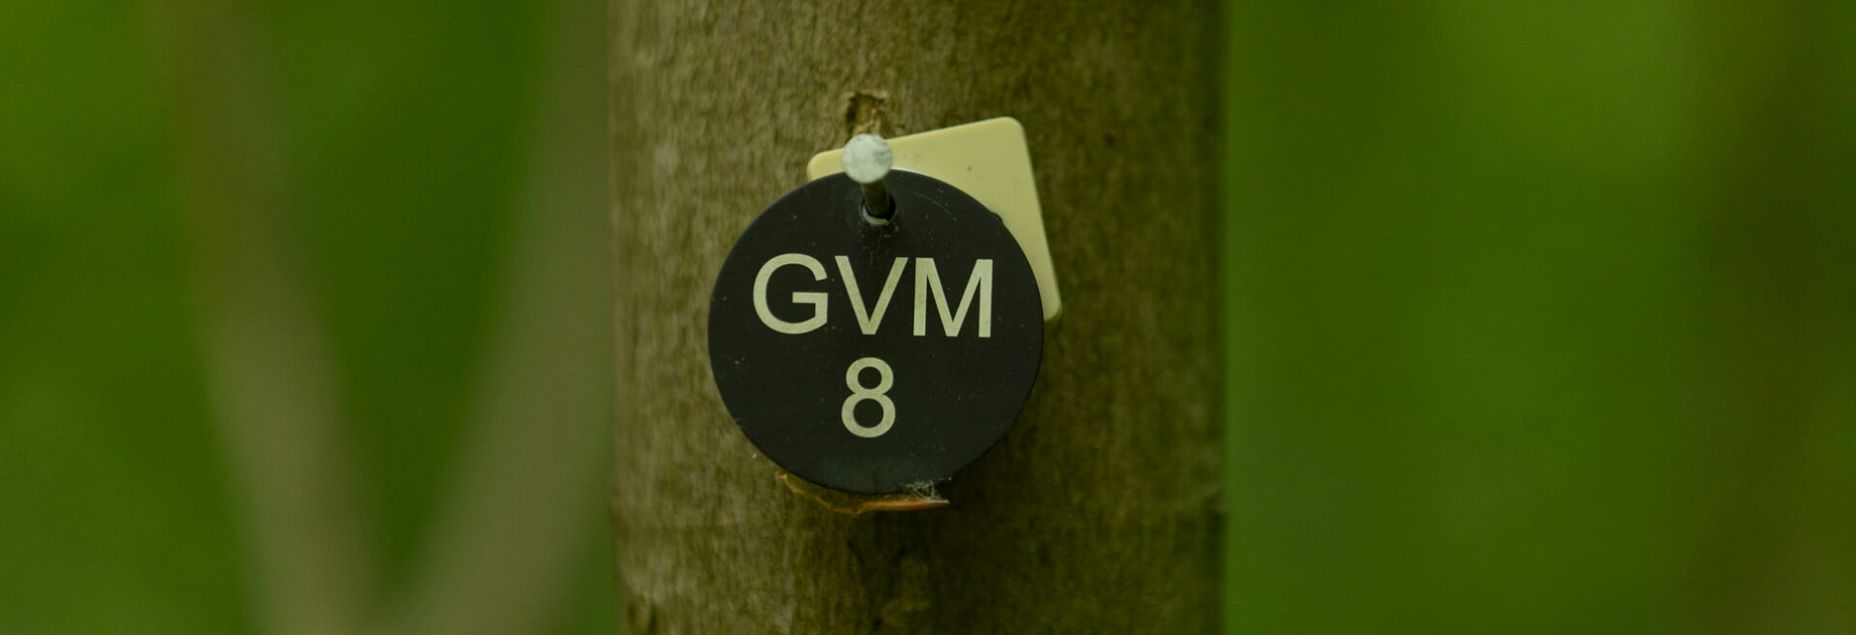 Baum GVM 8 - Plakette